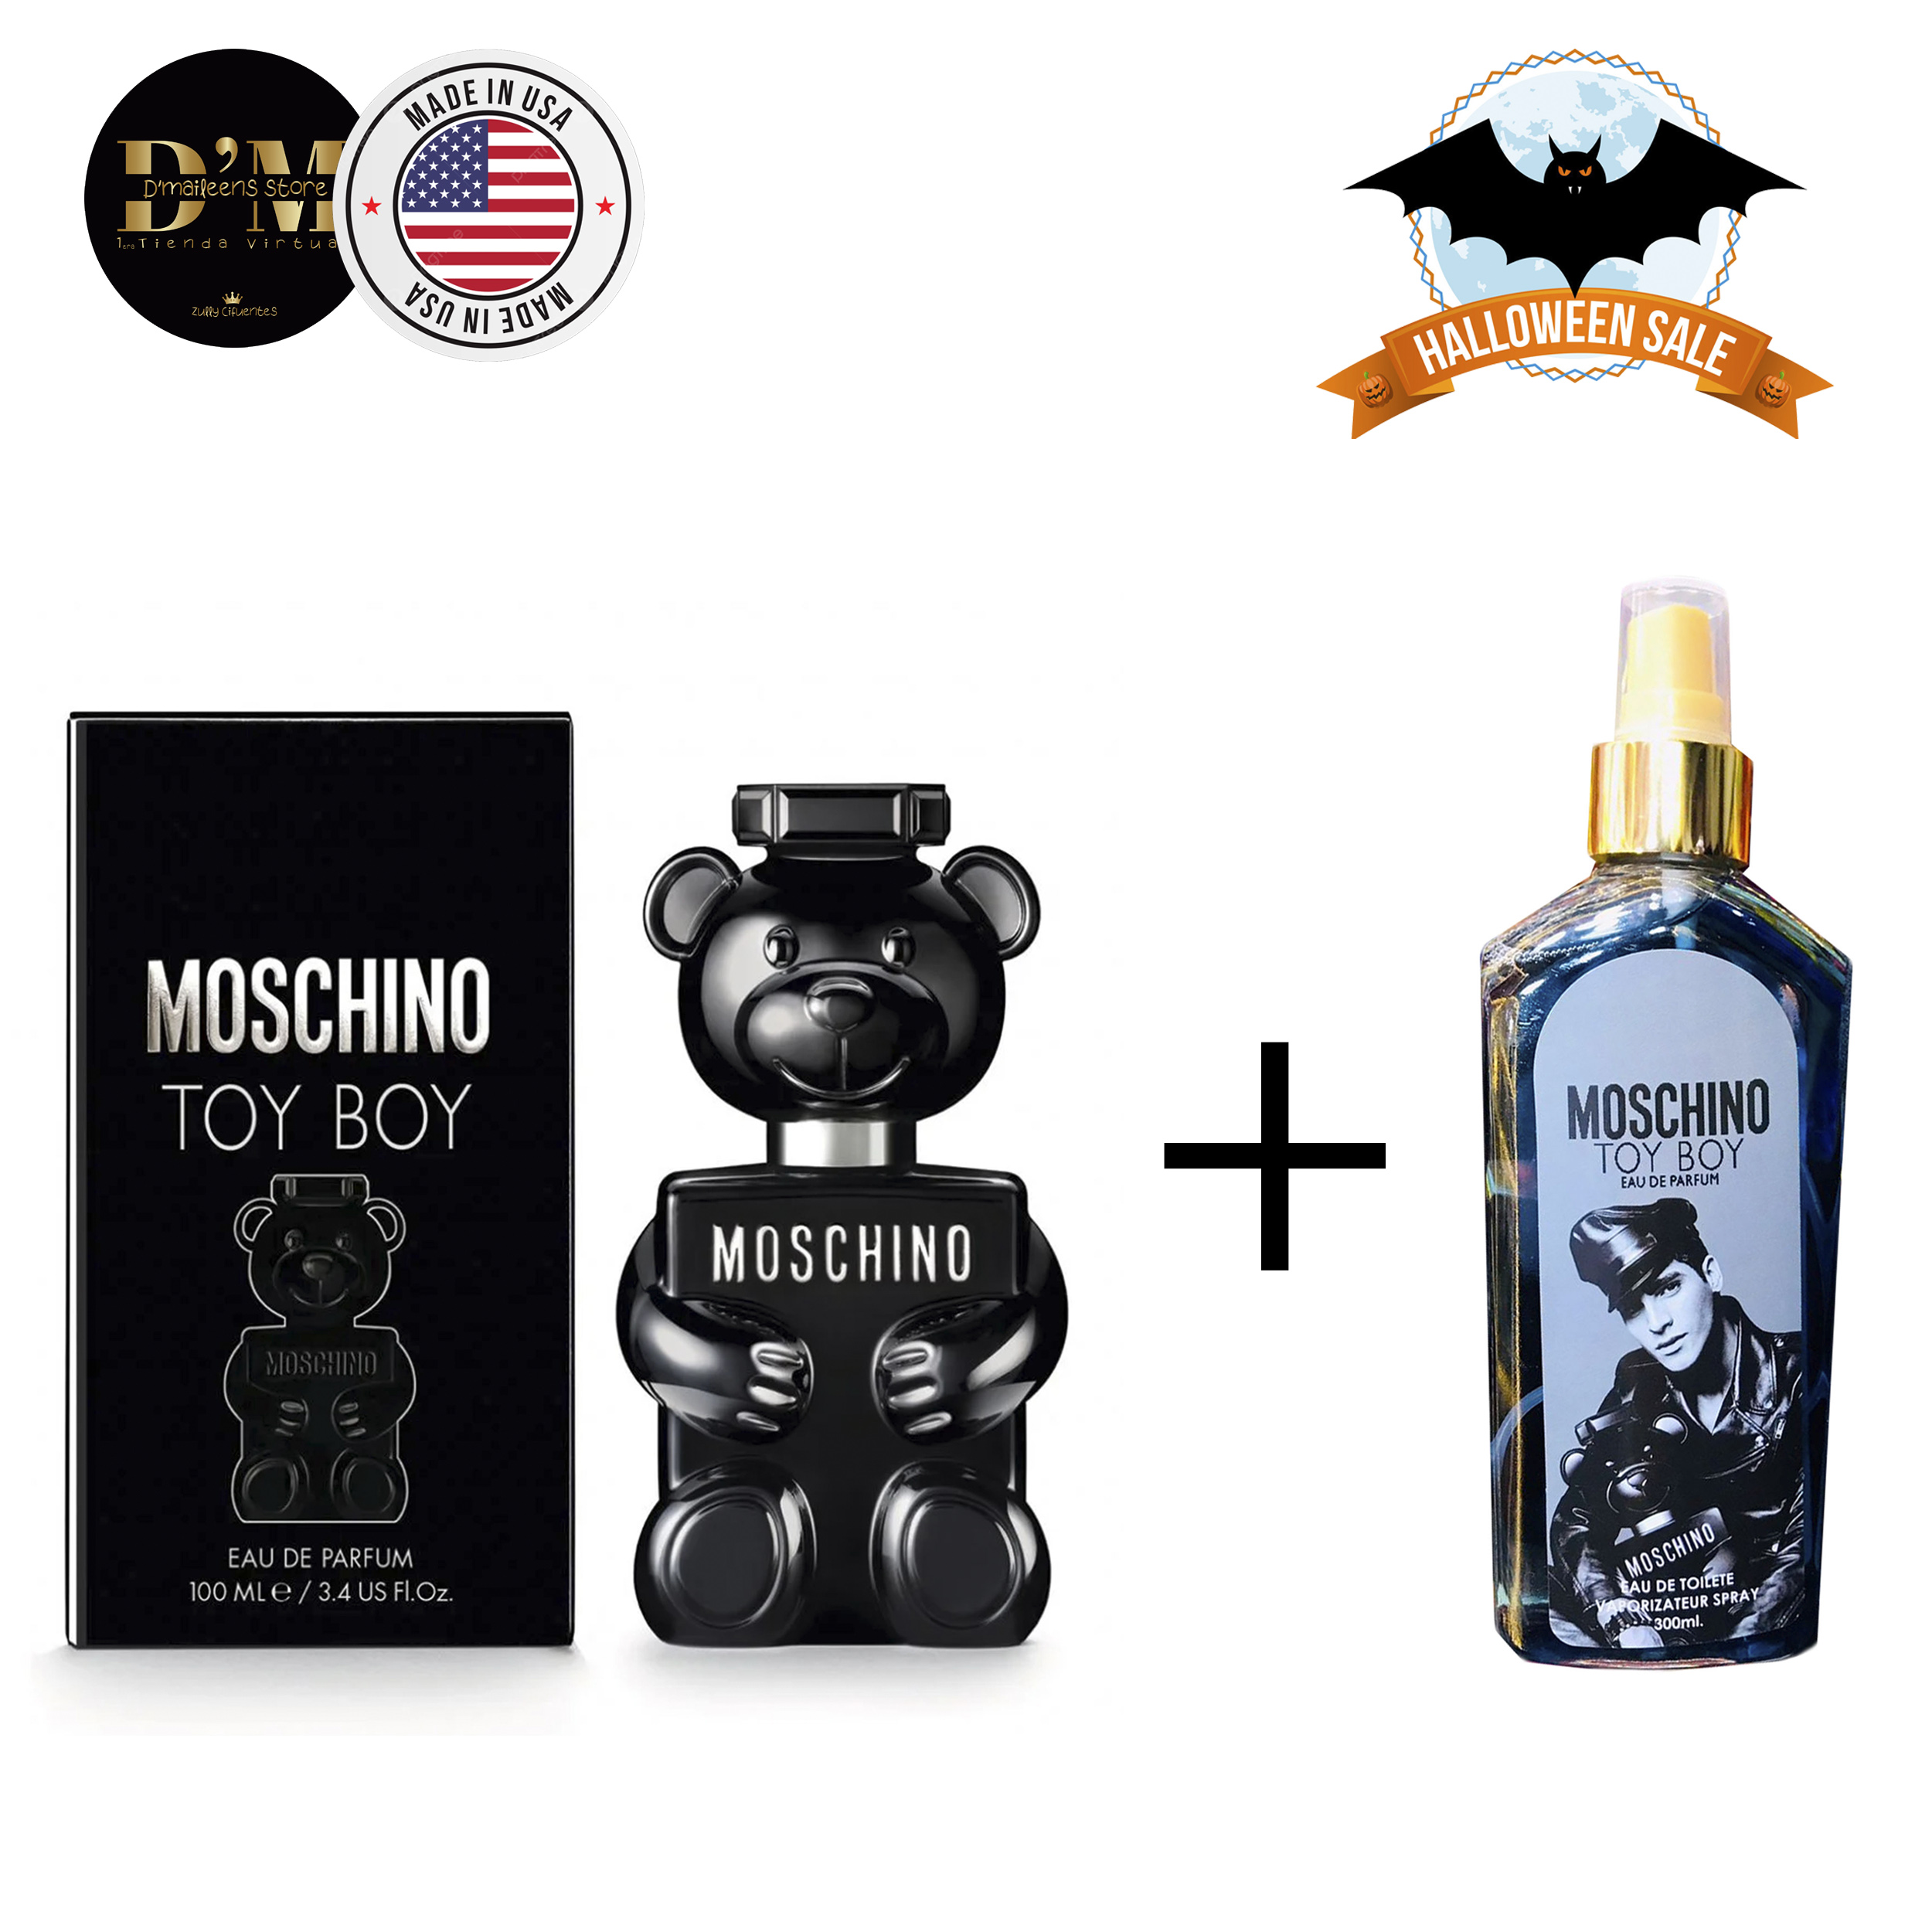  Promoción Exclusiva Hallowen: Moschino Perfume Toy Boy + Splash Corporal (Replica Con Fragancia Importada)- Hombre